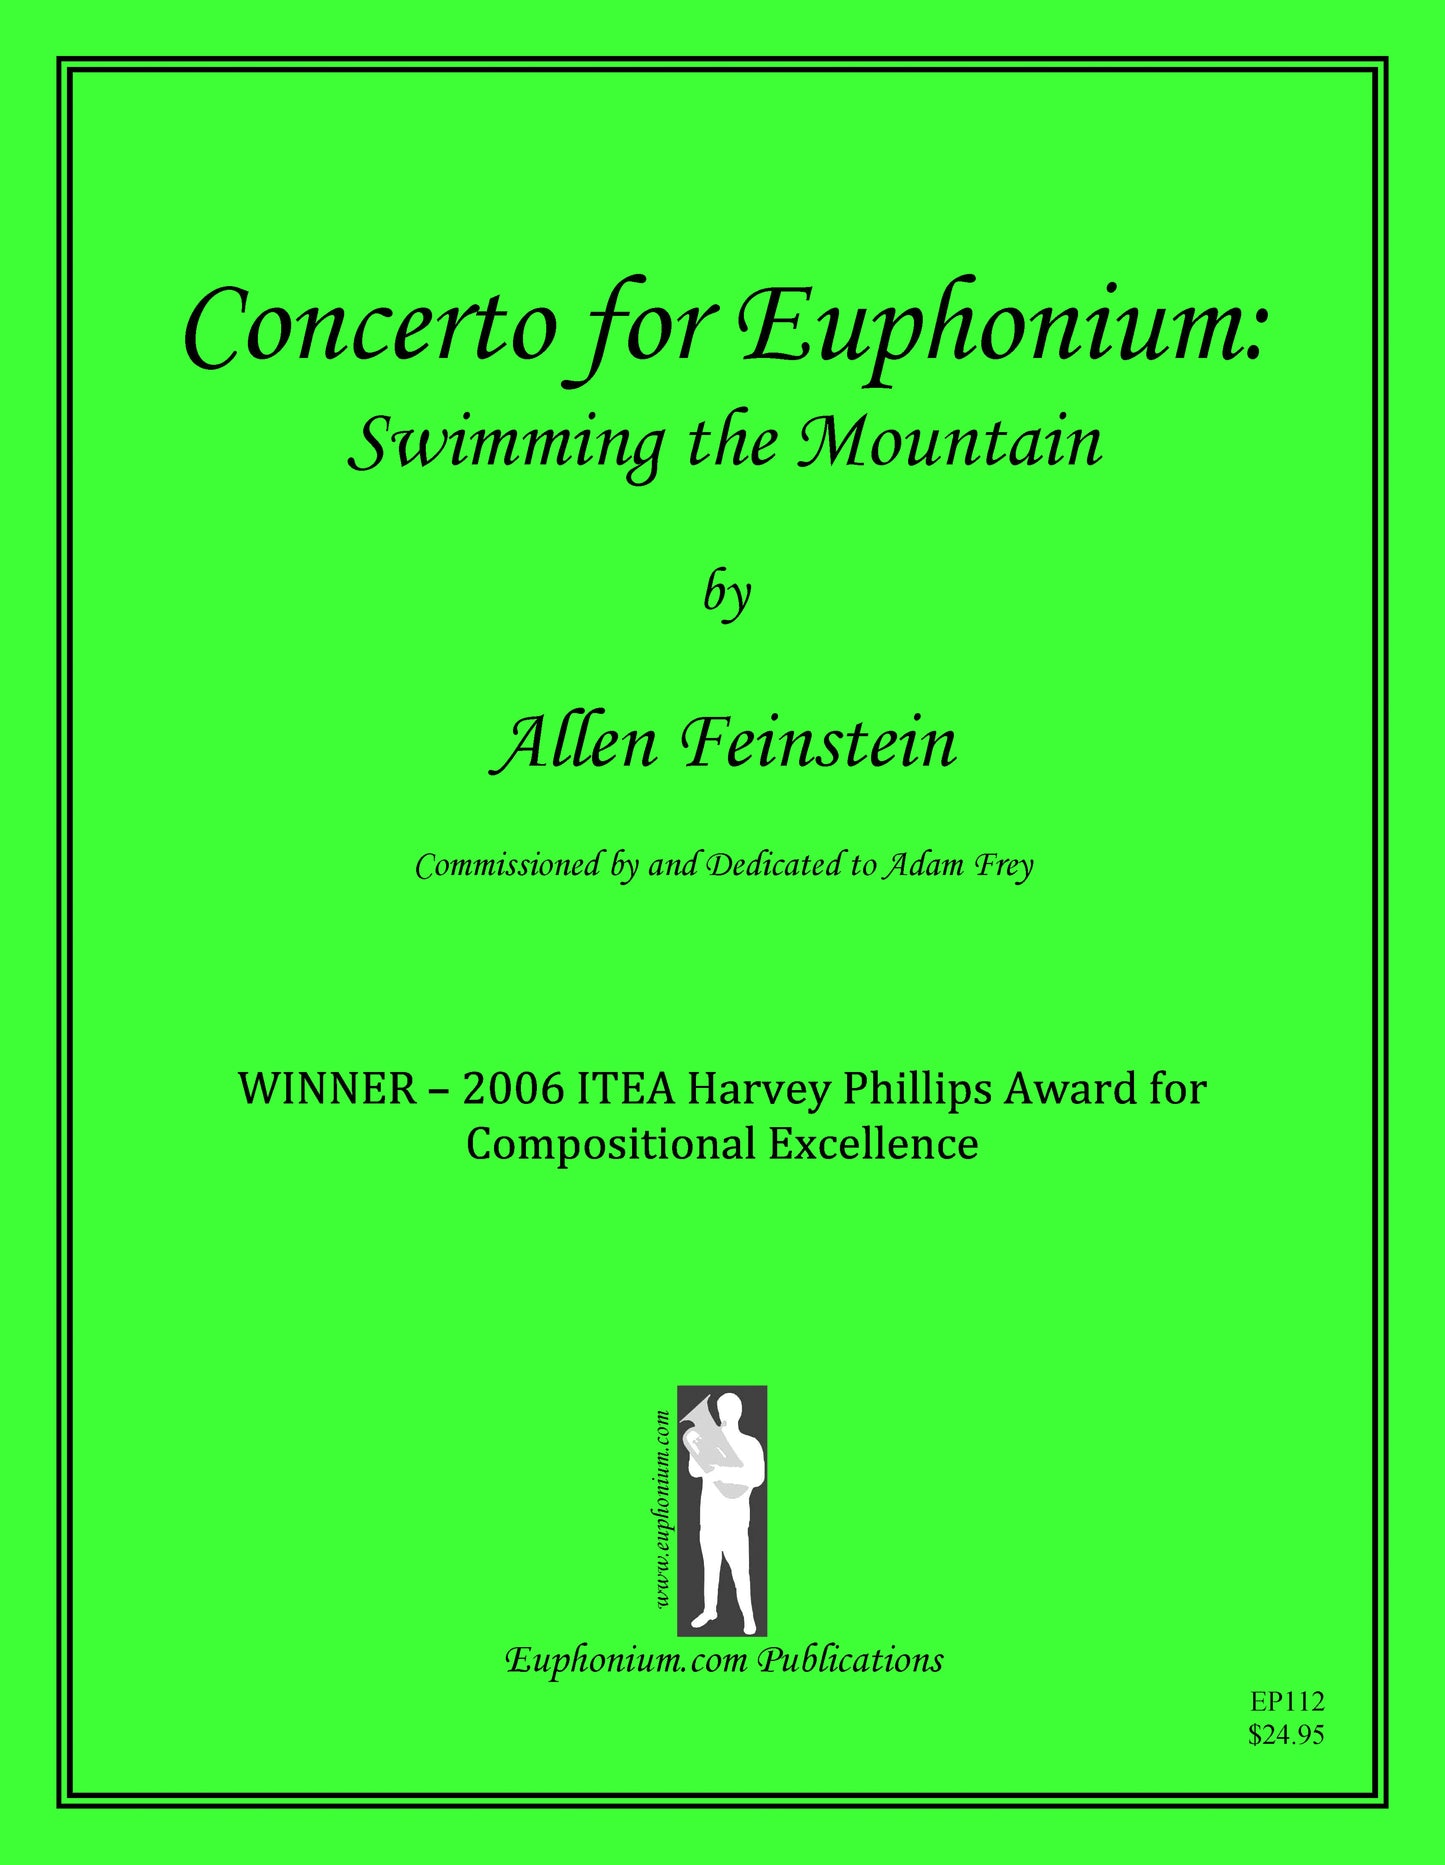 Feinstein, Allen - Concerto for Euphonium - 2nd Mvt Eclipse - DOWNLOAD